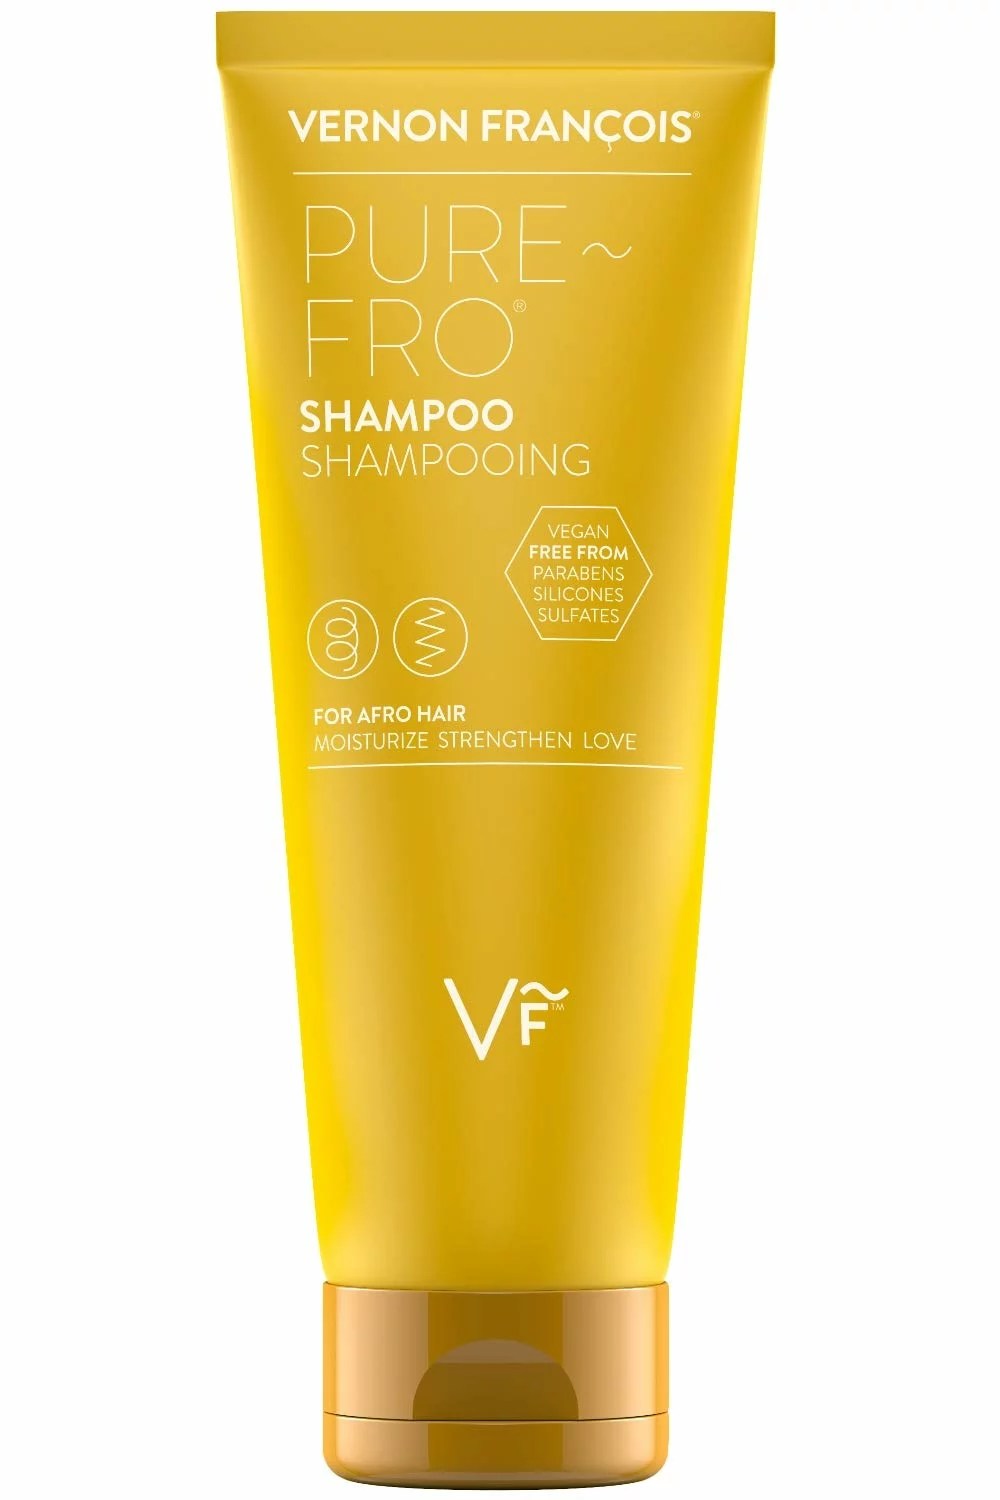 vernon francois shampoo